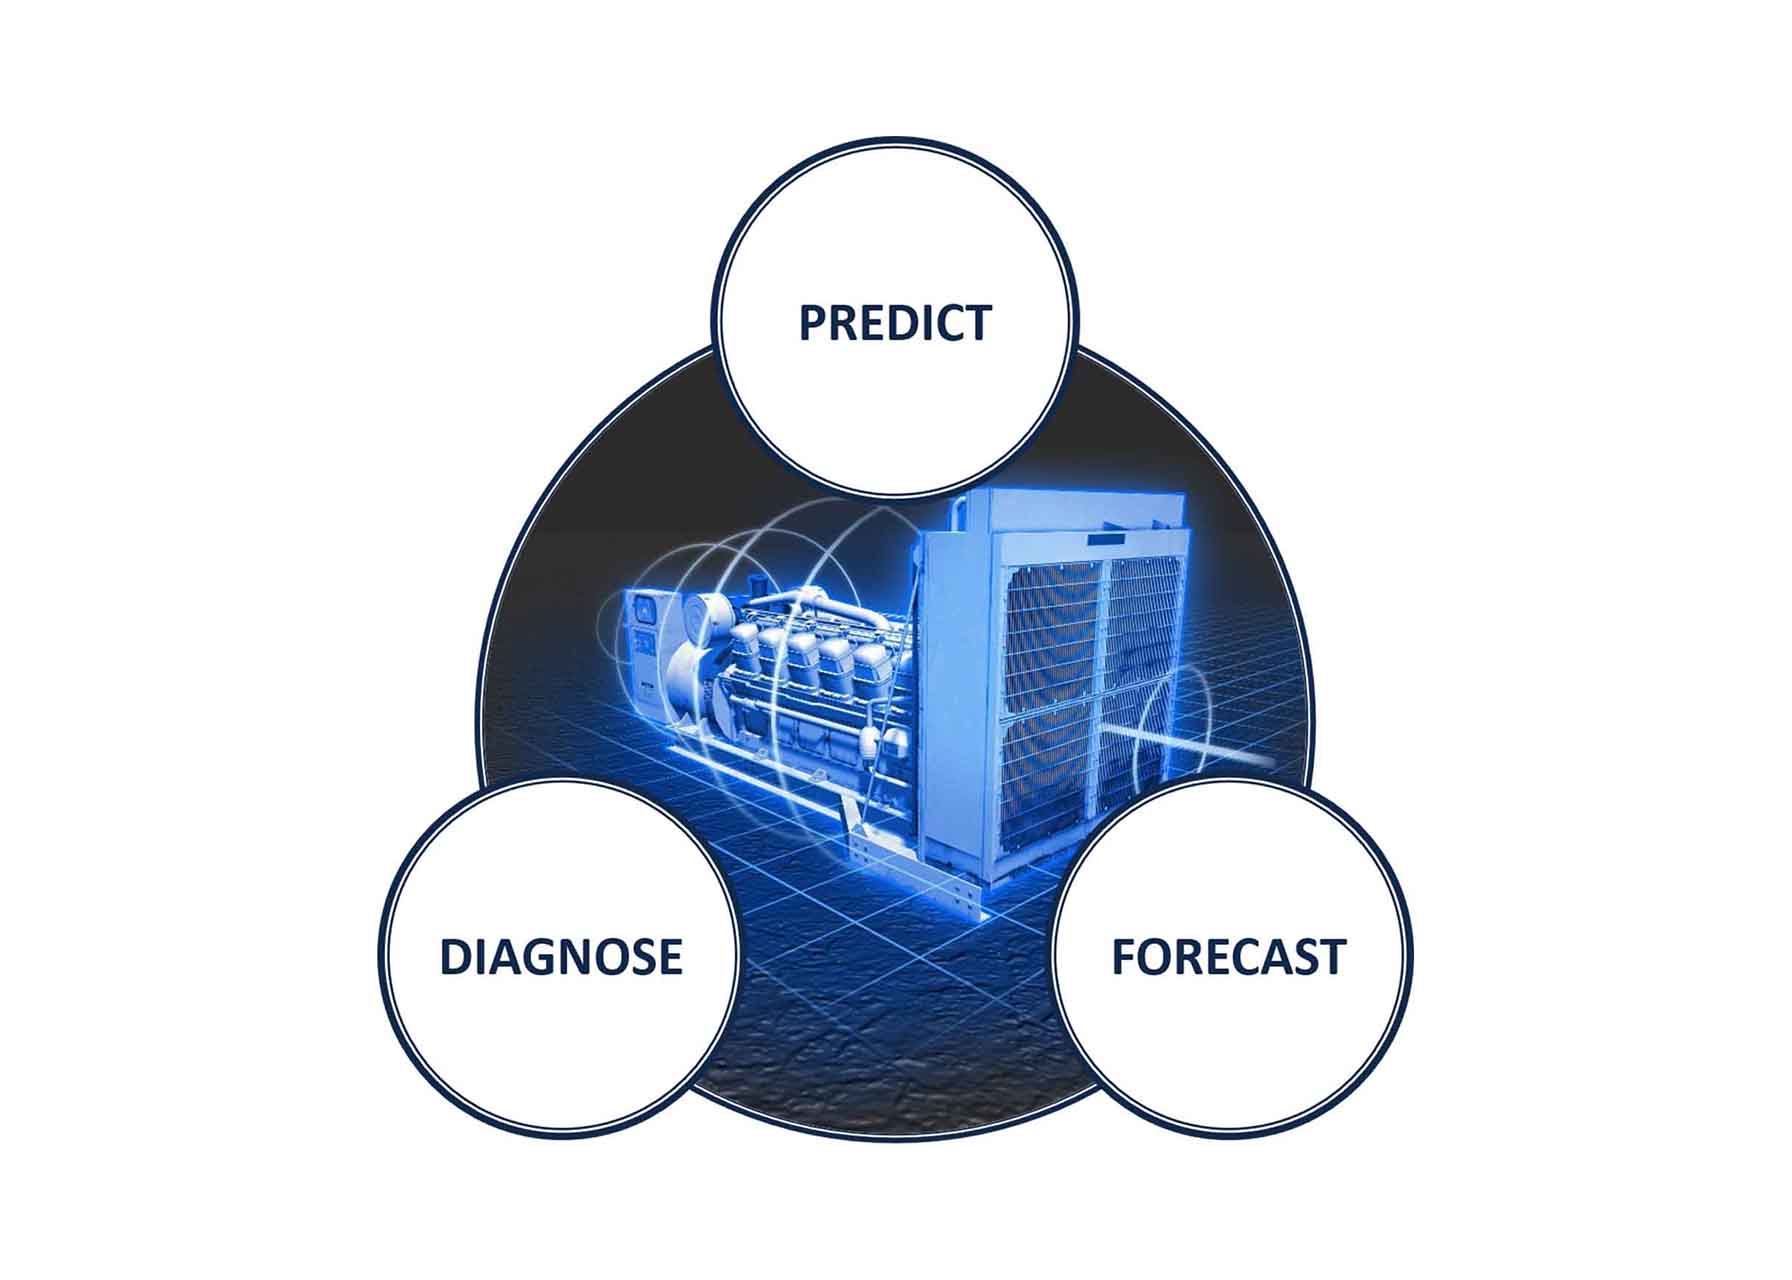 Asset performance Management from GE Digital helps industrials predict, forecast, diagnose asset health